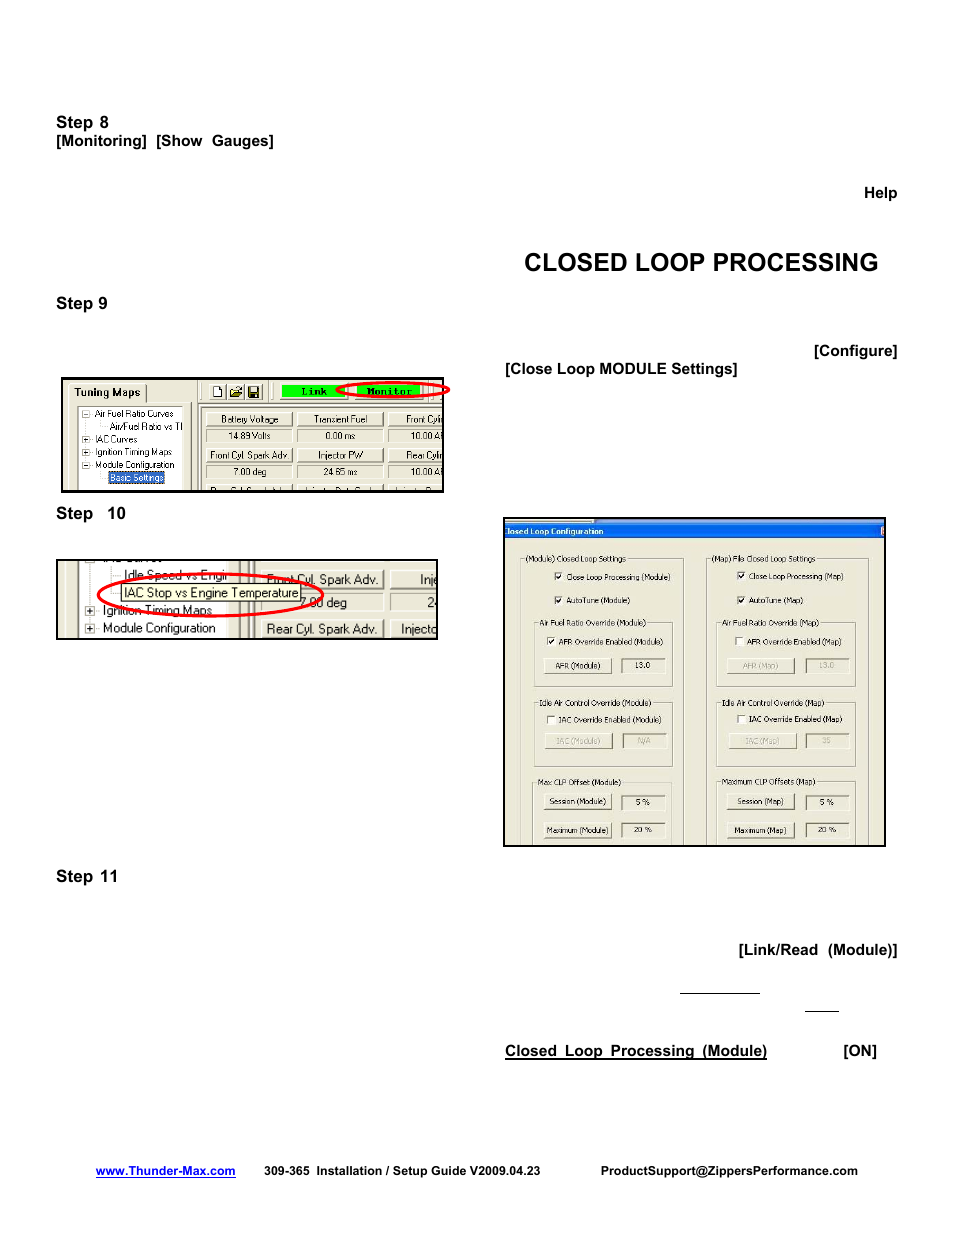 Closed loop processing | Zipper Mowers Thunder-Max 309-365 User Manual | Page 5 / 7